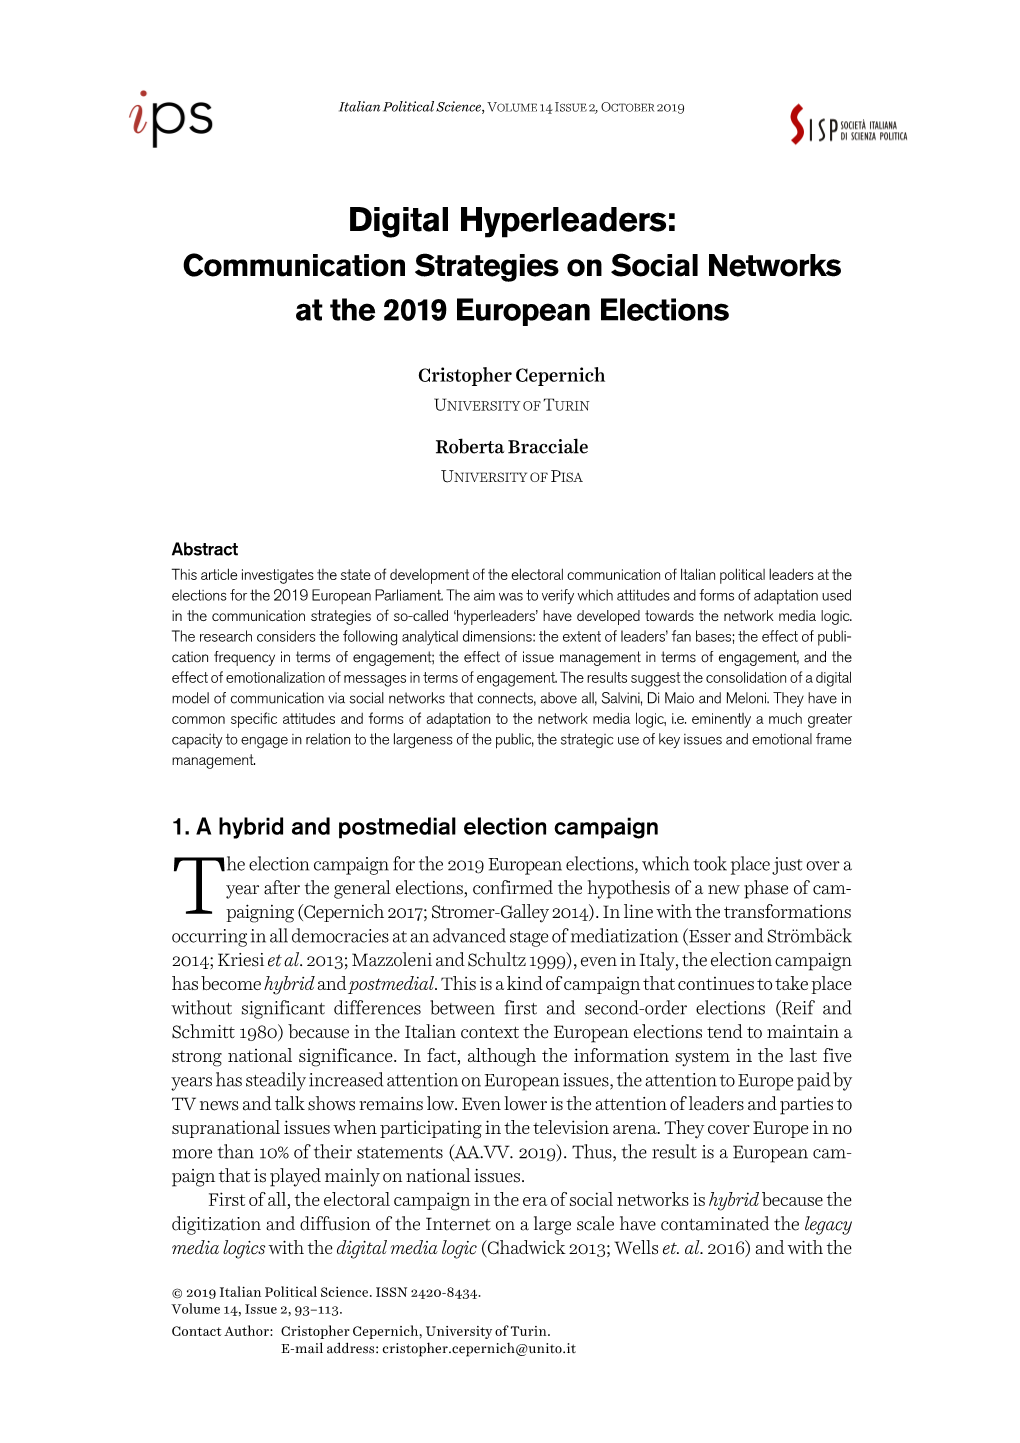 Digital Hyperleaders: Communication Strategies on Social Networks at the 2019 European Elections